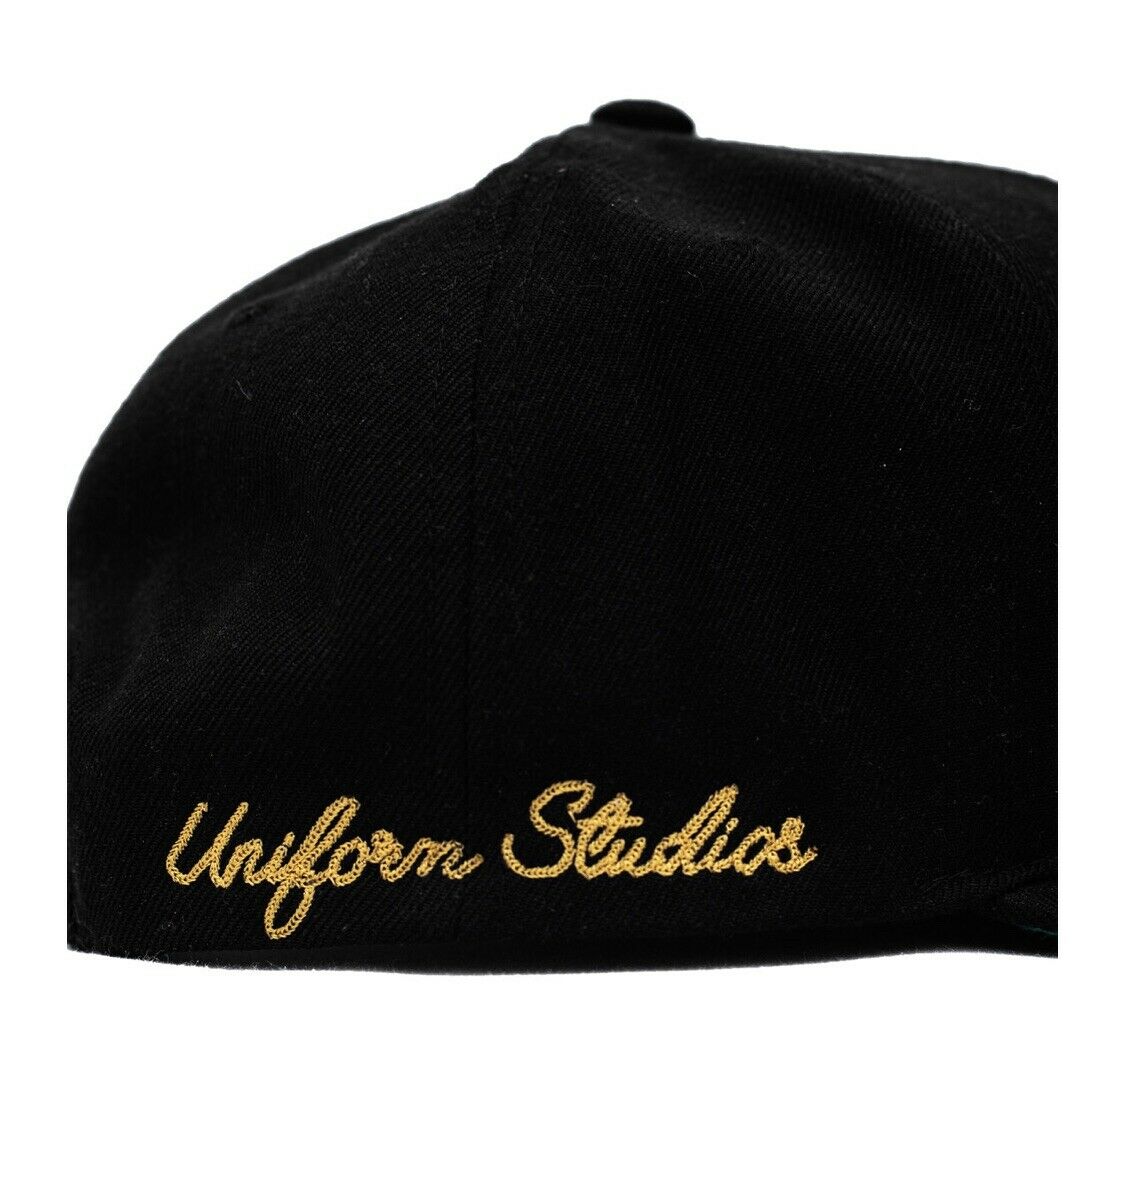 Uniform Studios Custom 6 Panel Laker Hat Purple/Black